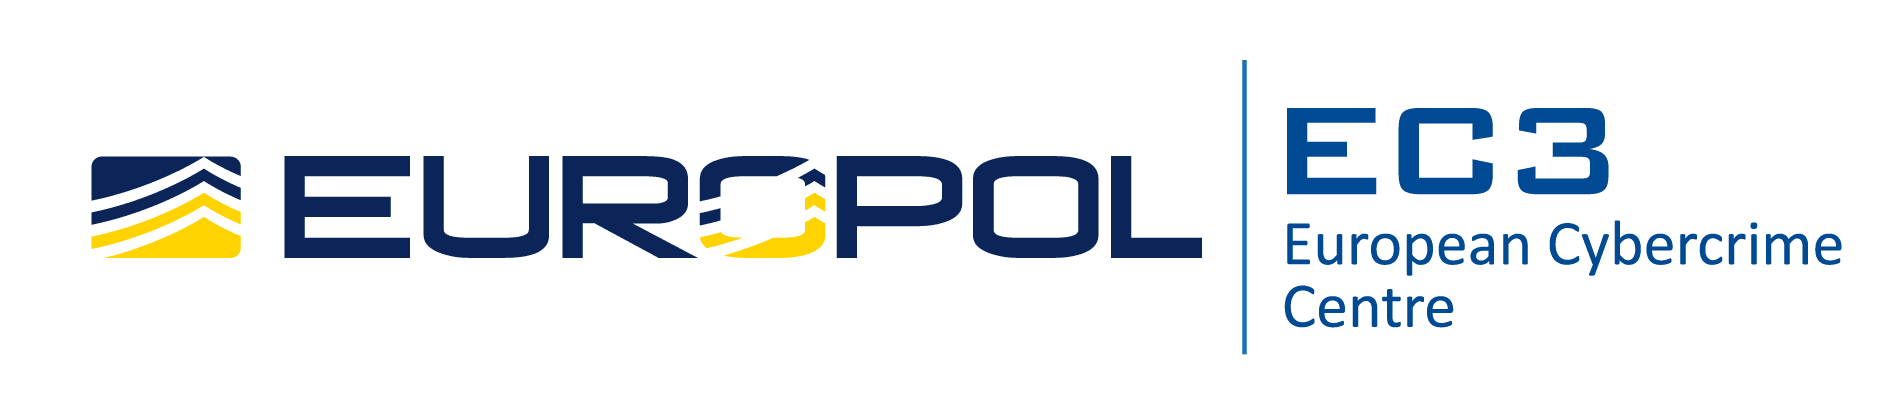 Europol EC3 Principal Blue